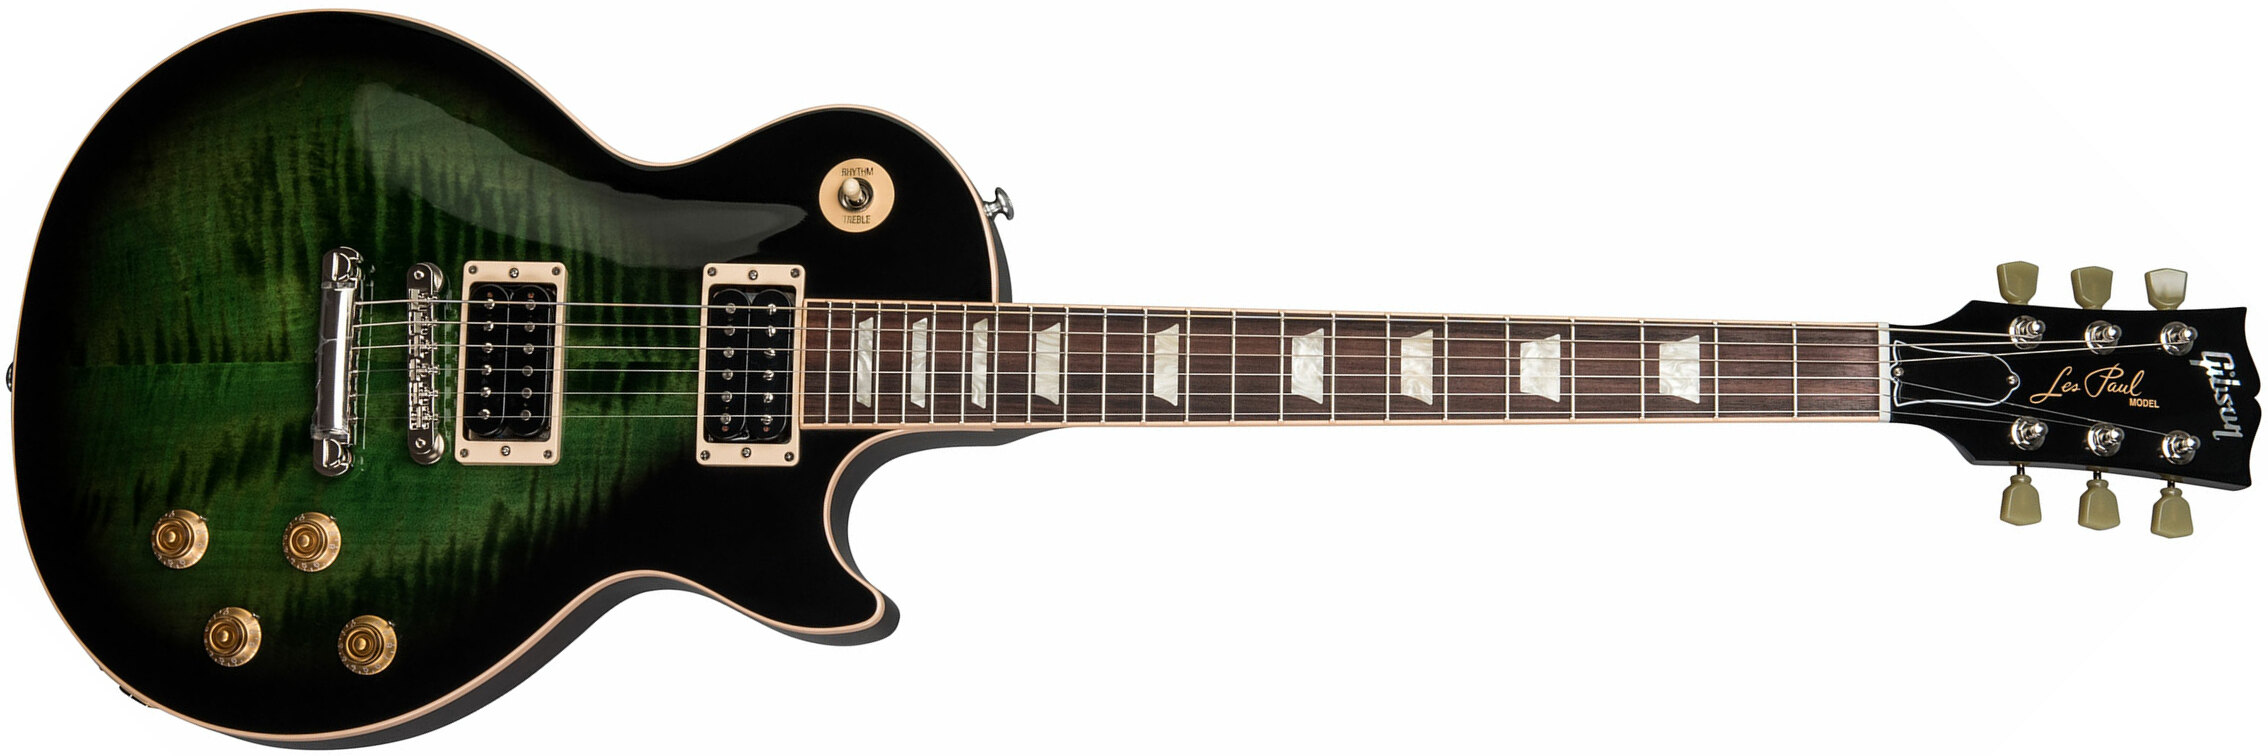 Gibson Slash Les Paul 2018 Signature Ltd Hh Ht Rw - Anaconda Burst - Single cut electric guitar - Main picture